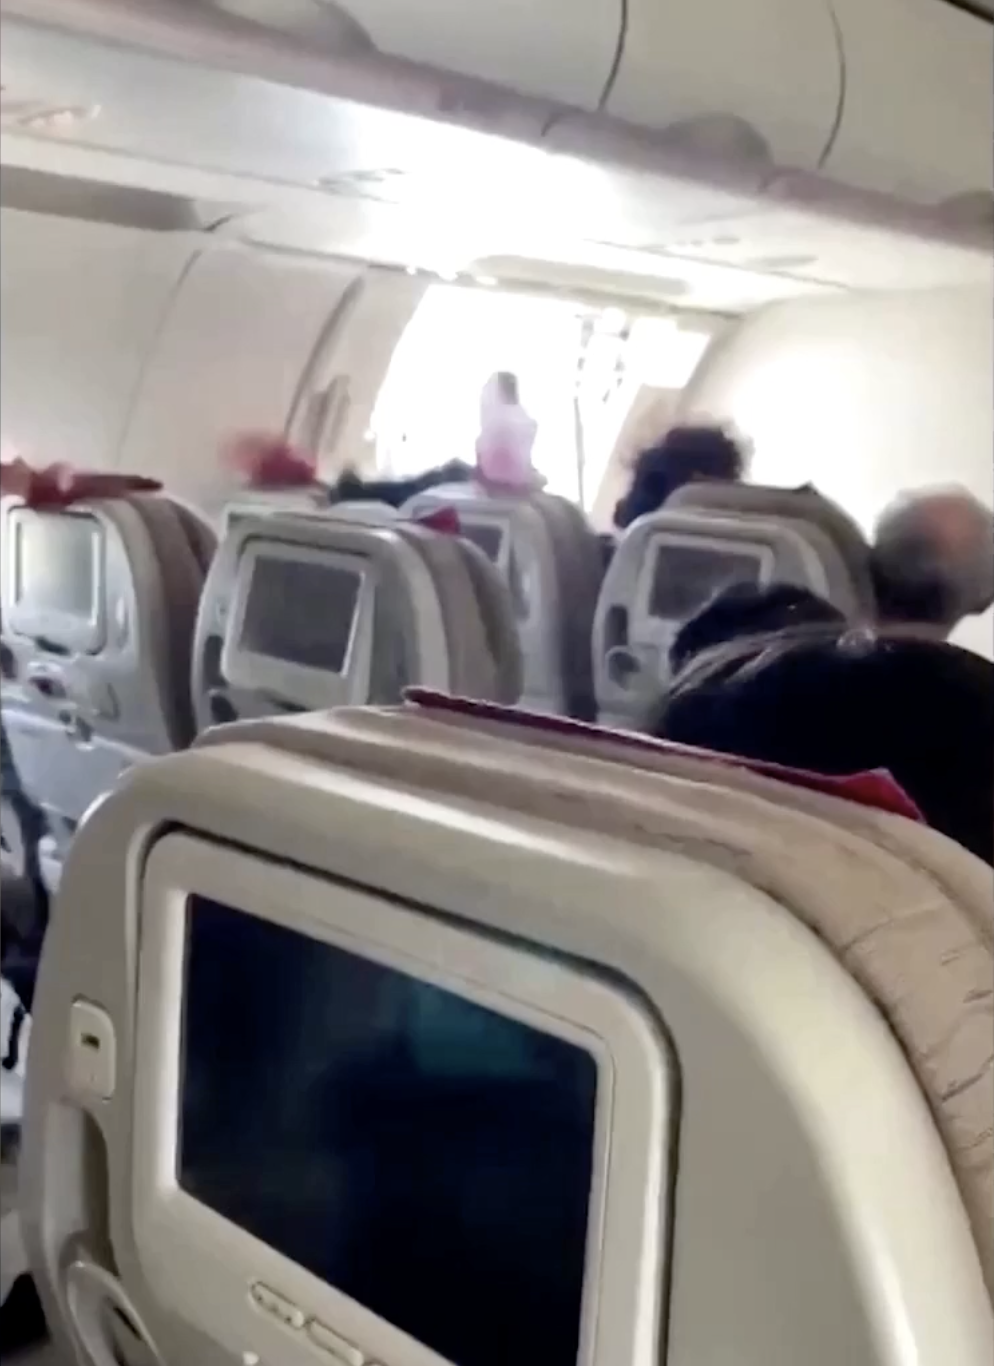 passenger video revealing inside of the cabin after Lee opened plane door